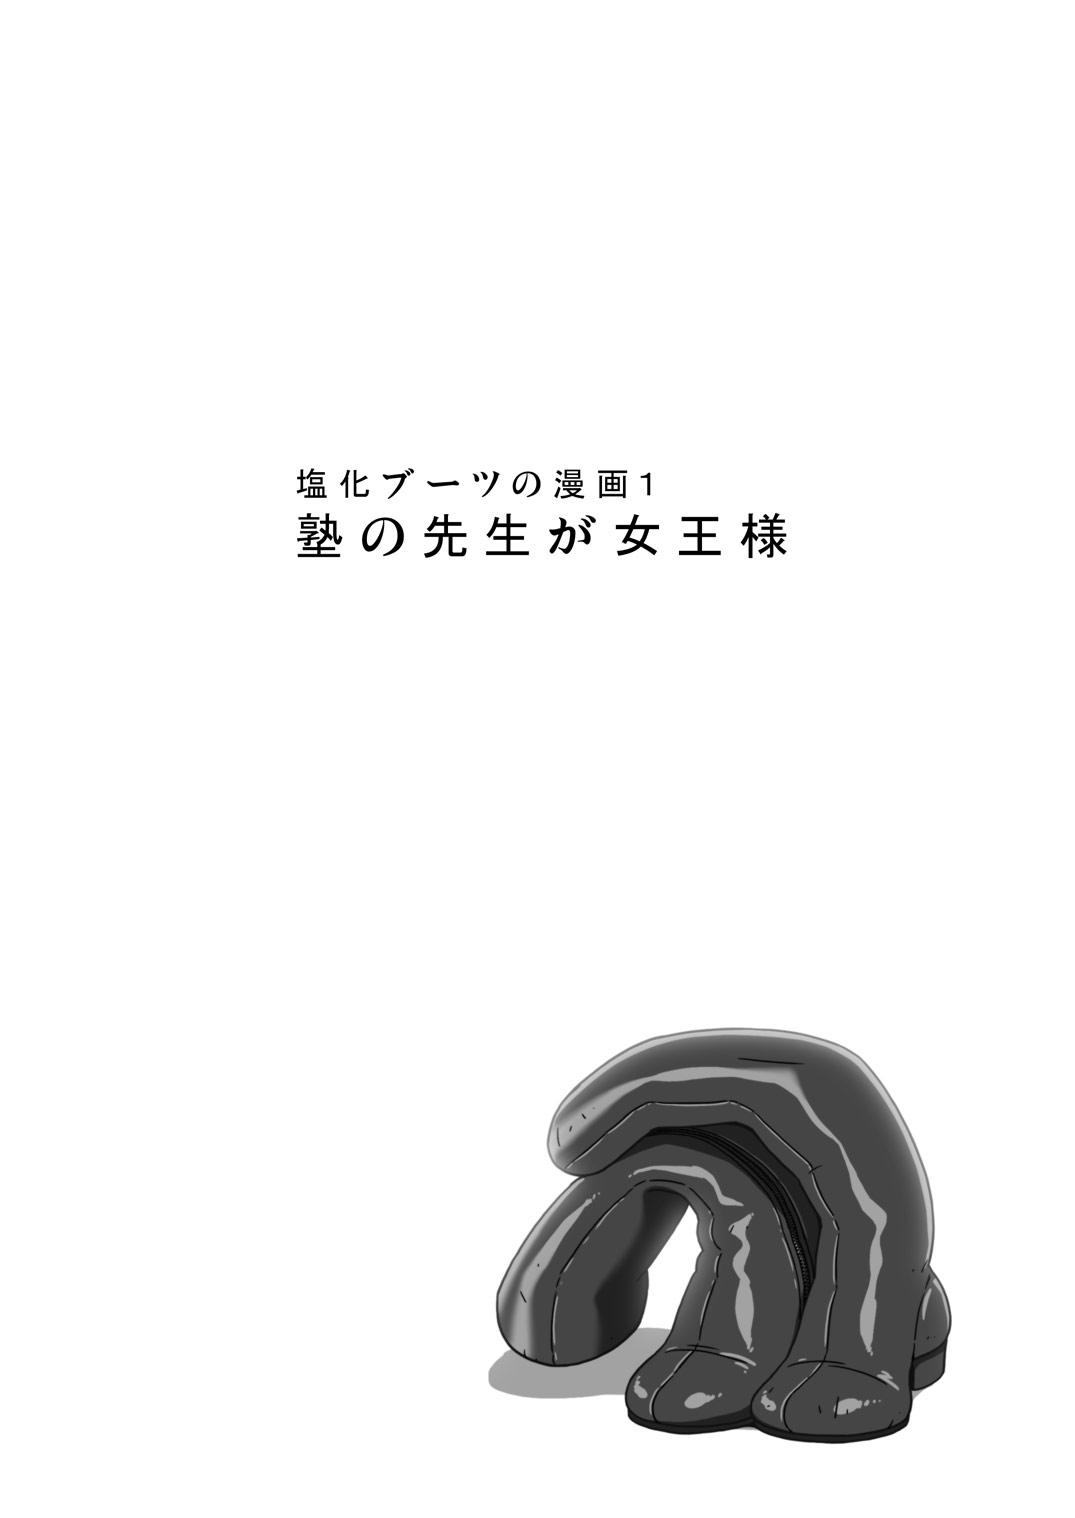 Enka Boots no Manga 1sama V2.0 4